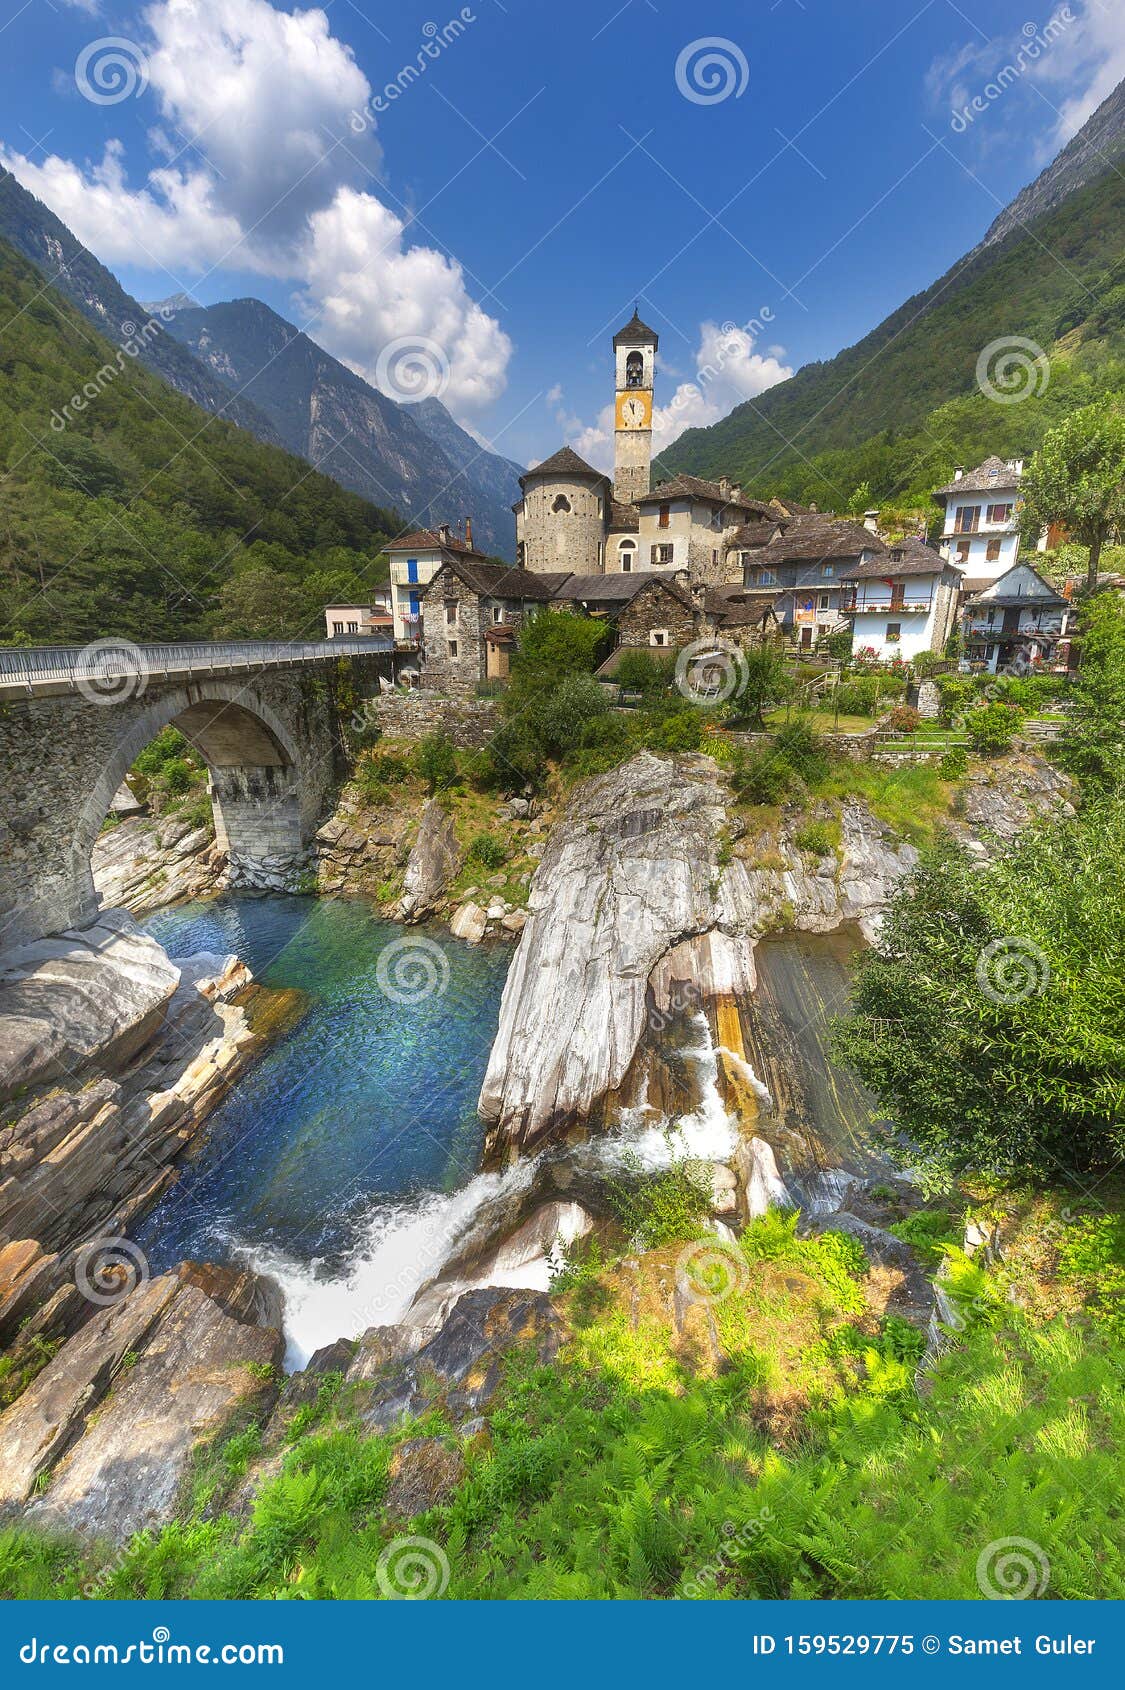 The Most Beautiful Nature Landscape City in World, Switzerland. Stock Image Image of panorama: 159529775